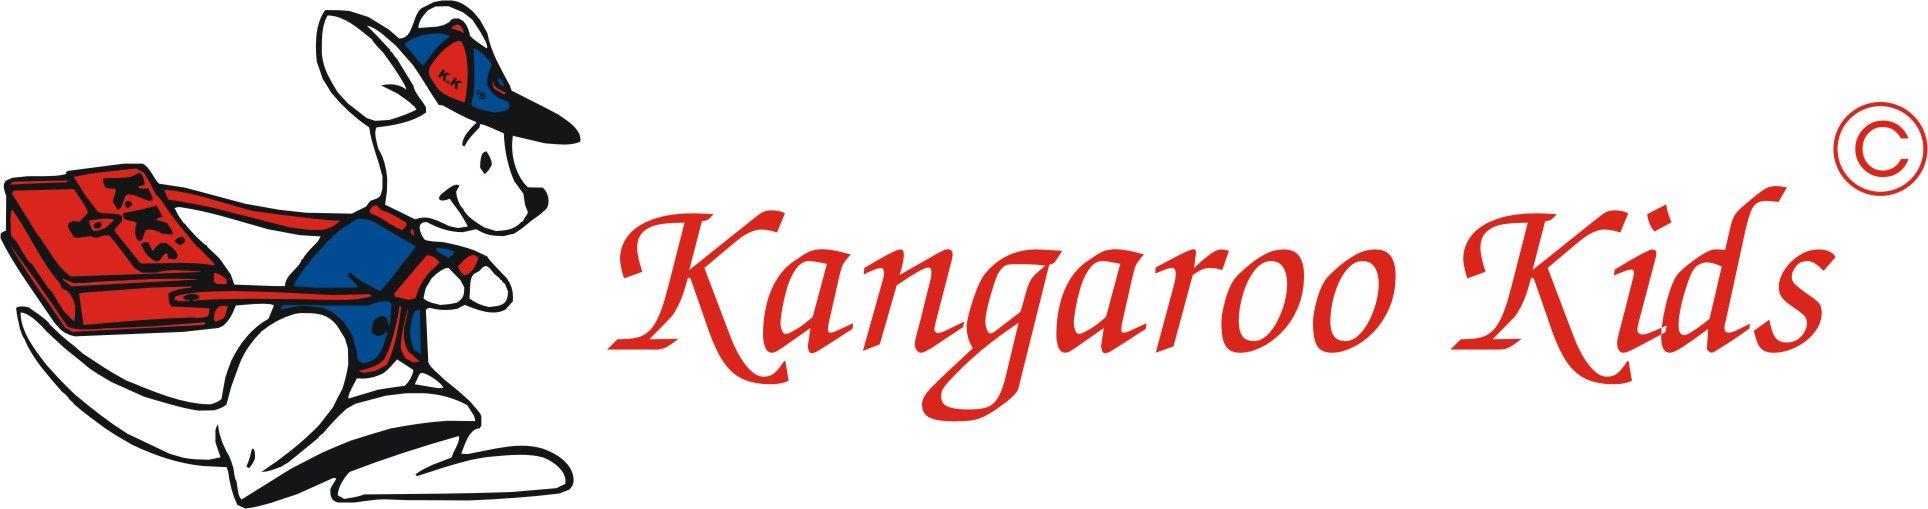 Kangaroo Q Logo - KANGAROO KIDS Questions and Answers